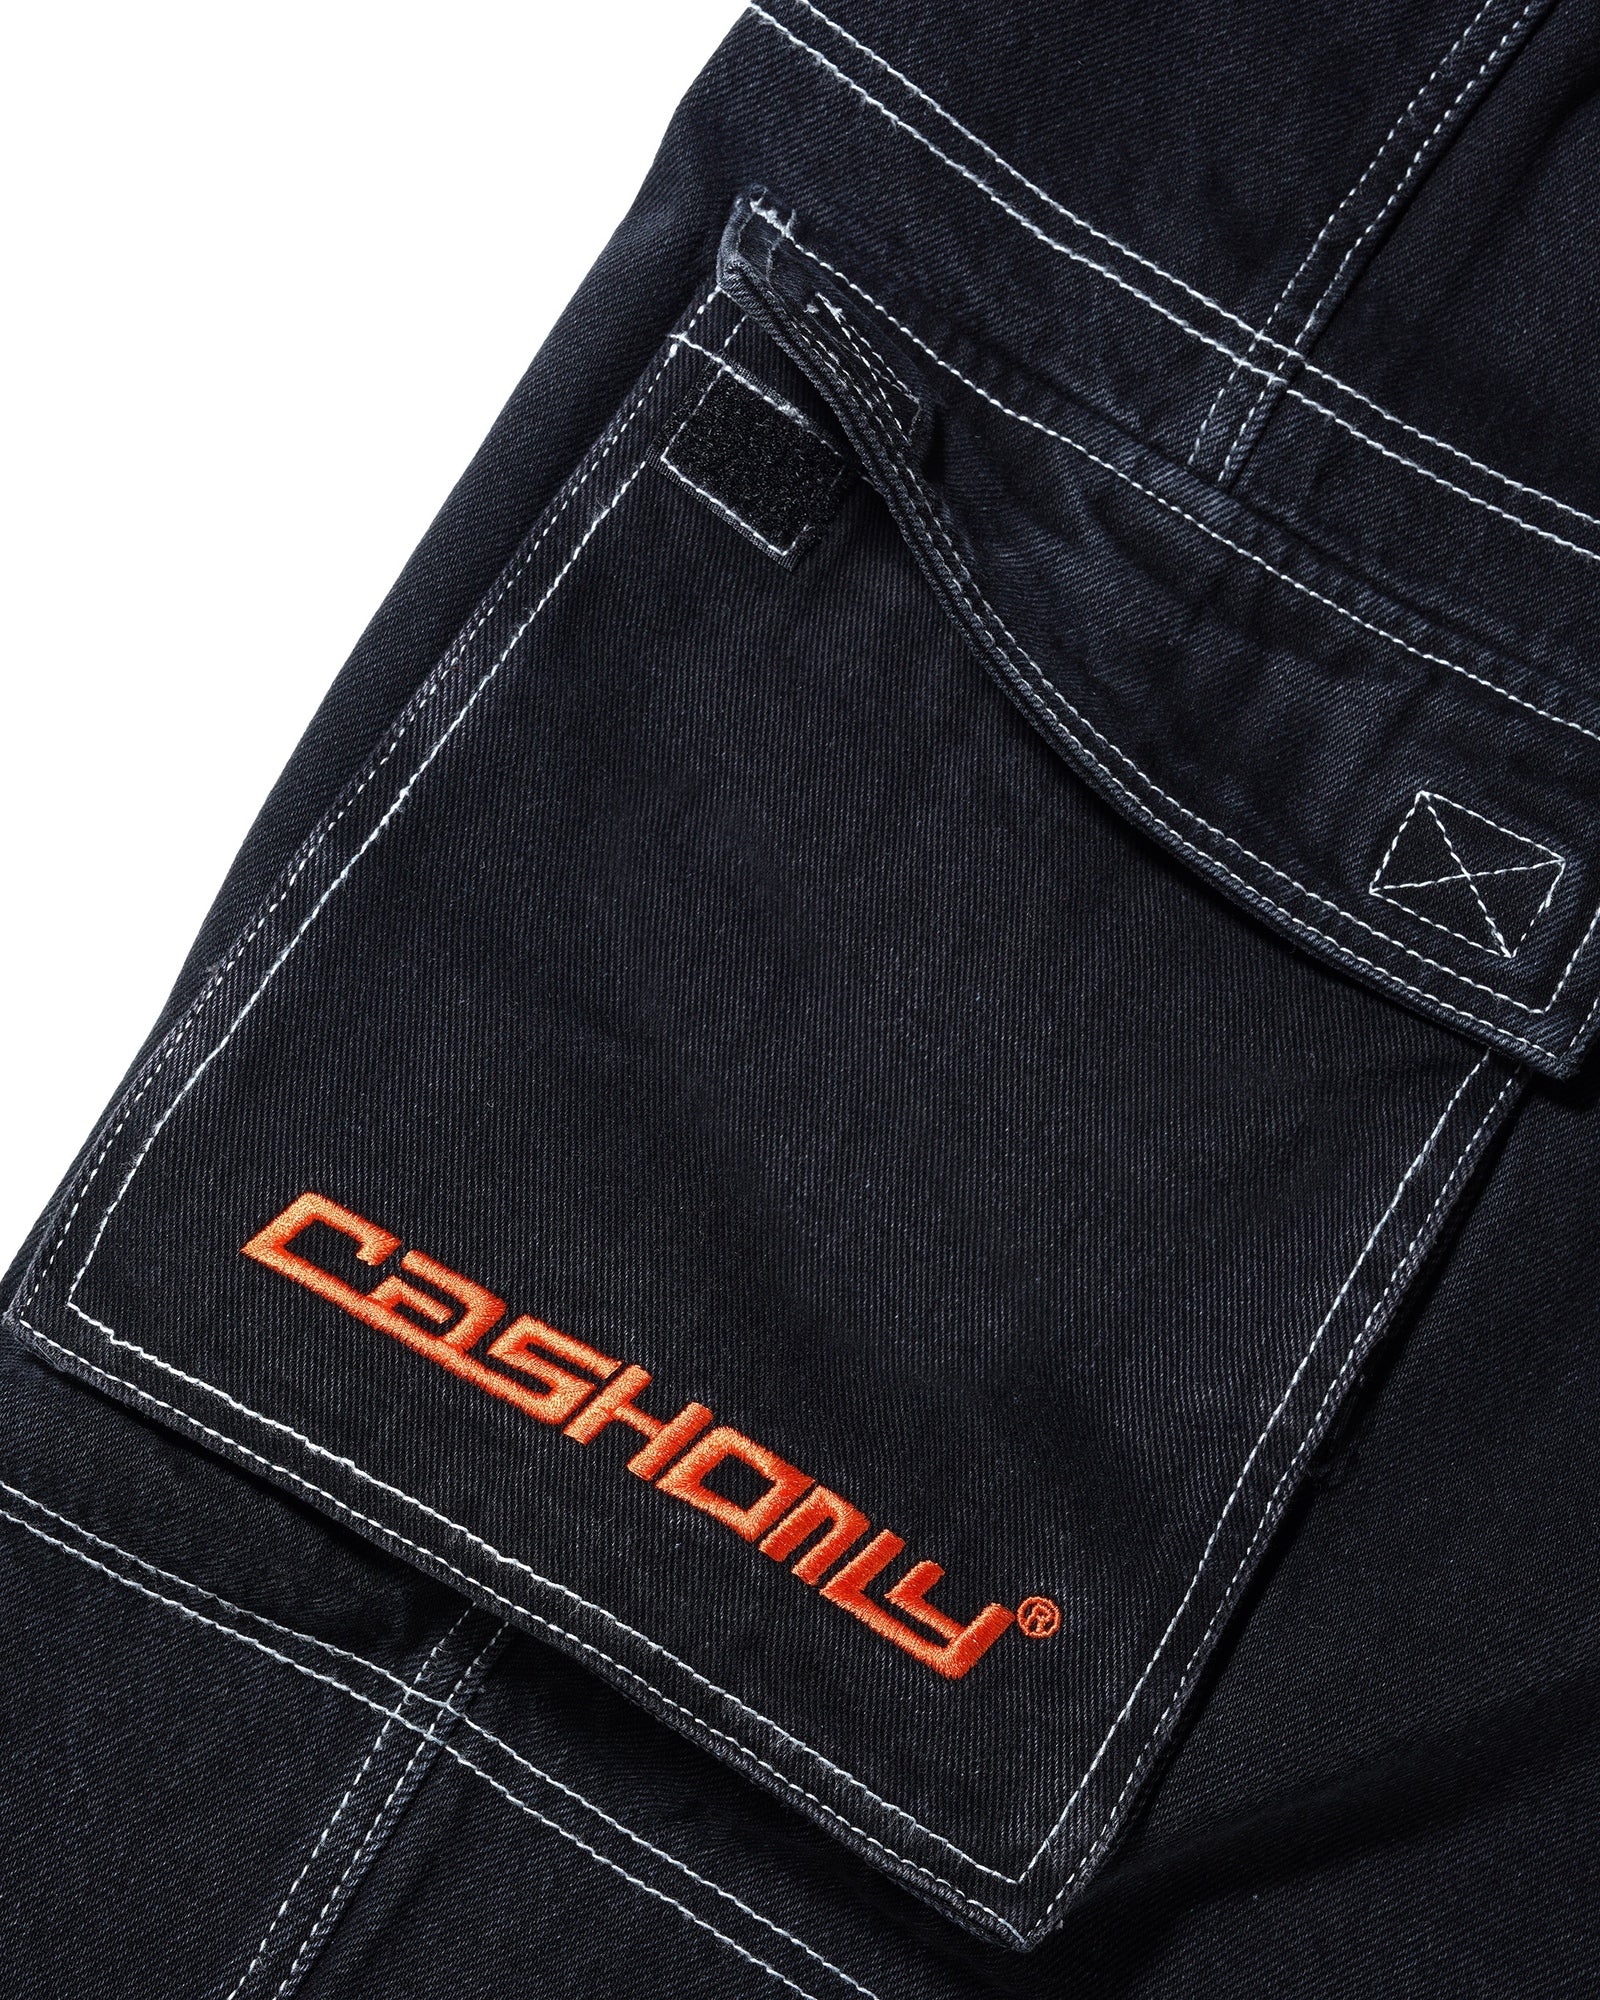 Washed Black   Cash Only Denim Cargo Shorts   JmksportShops